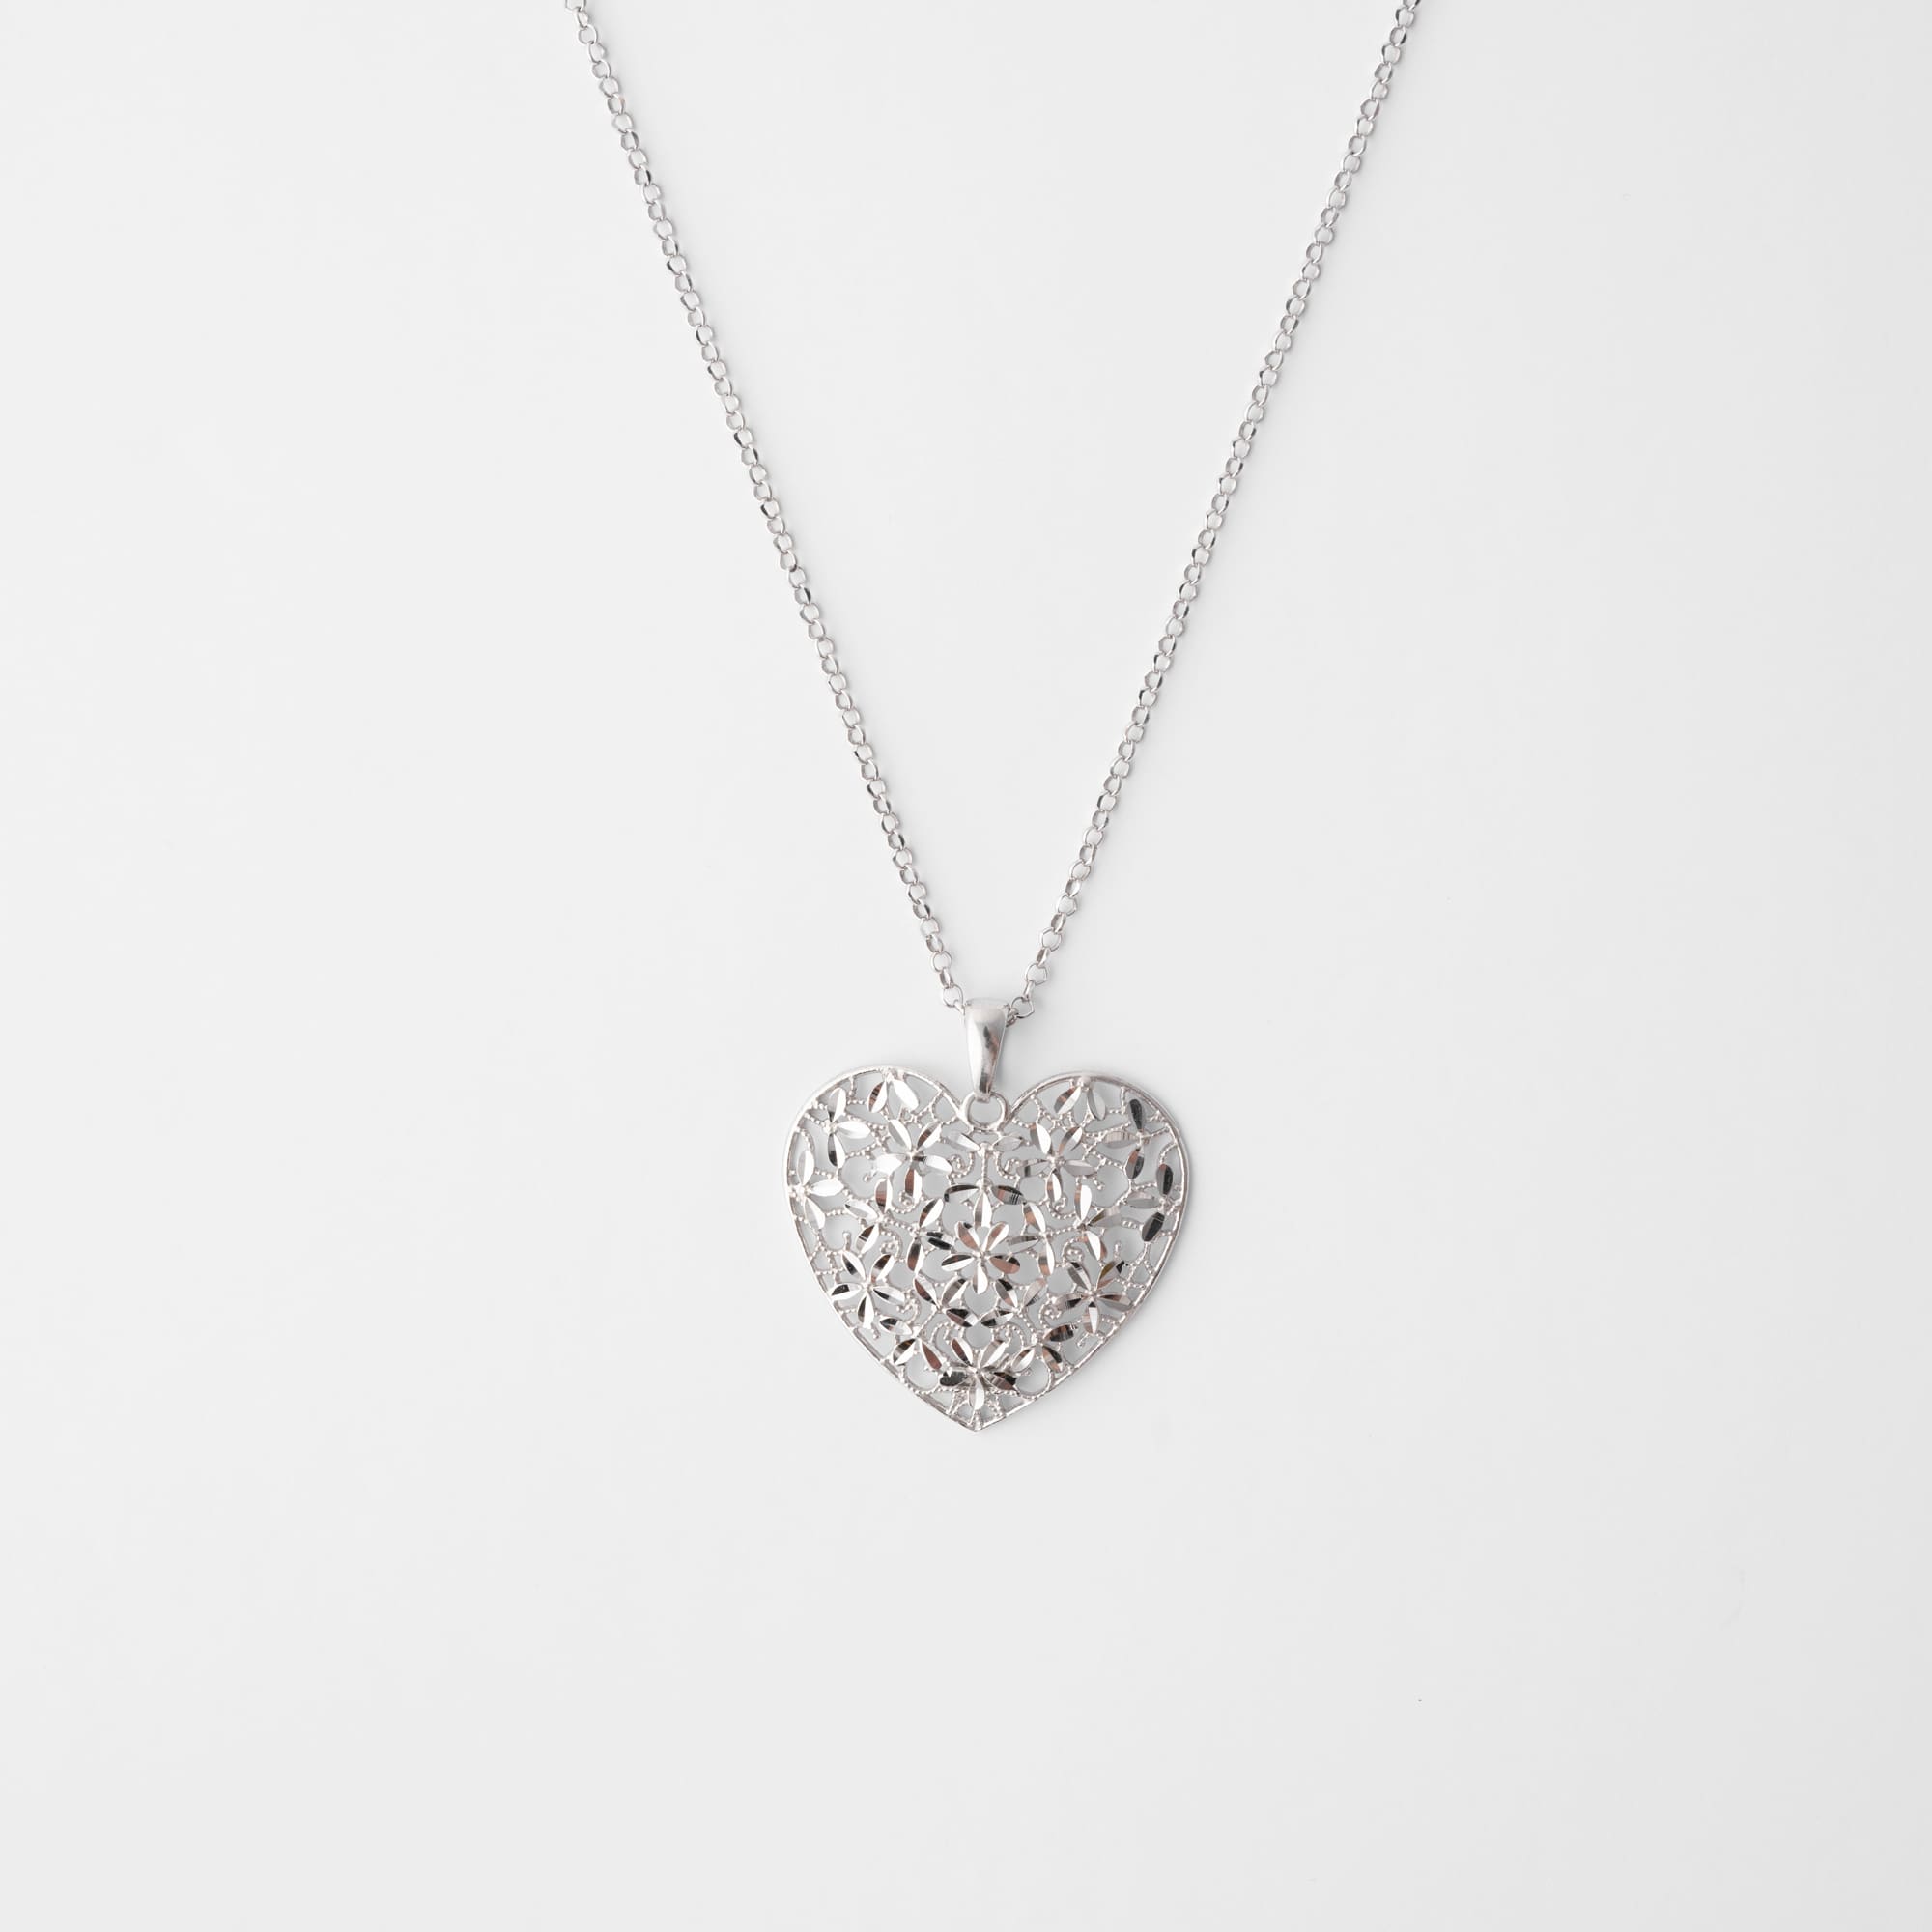 Filigree heart necklace